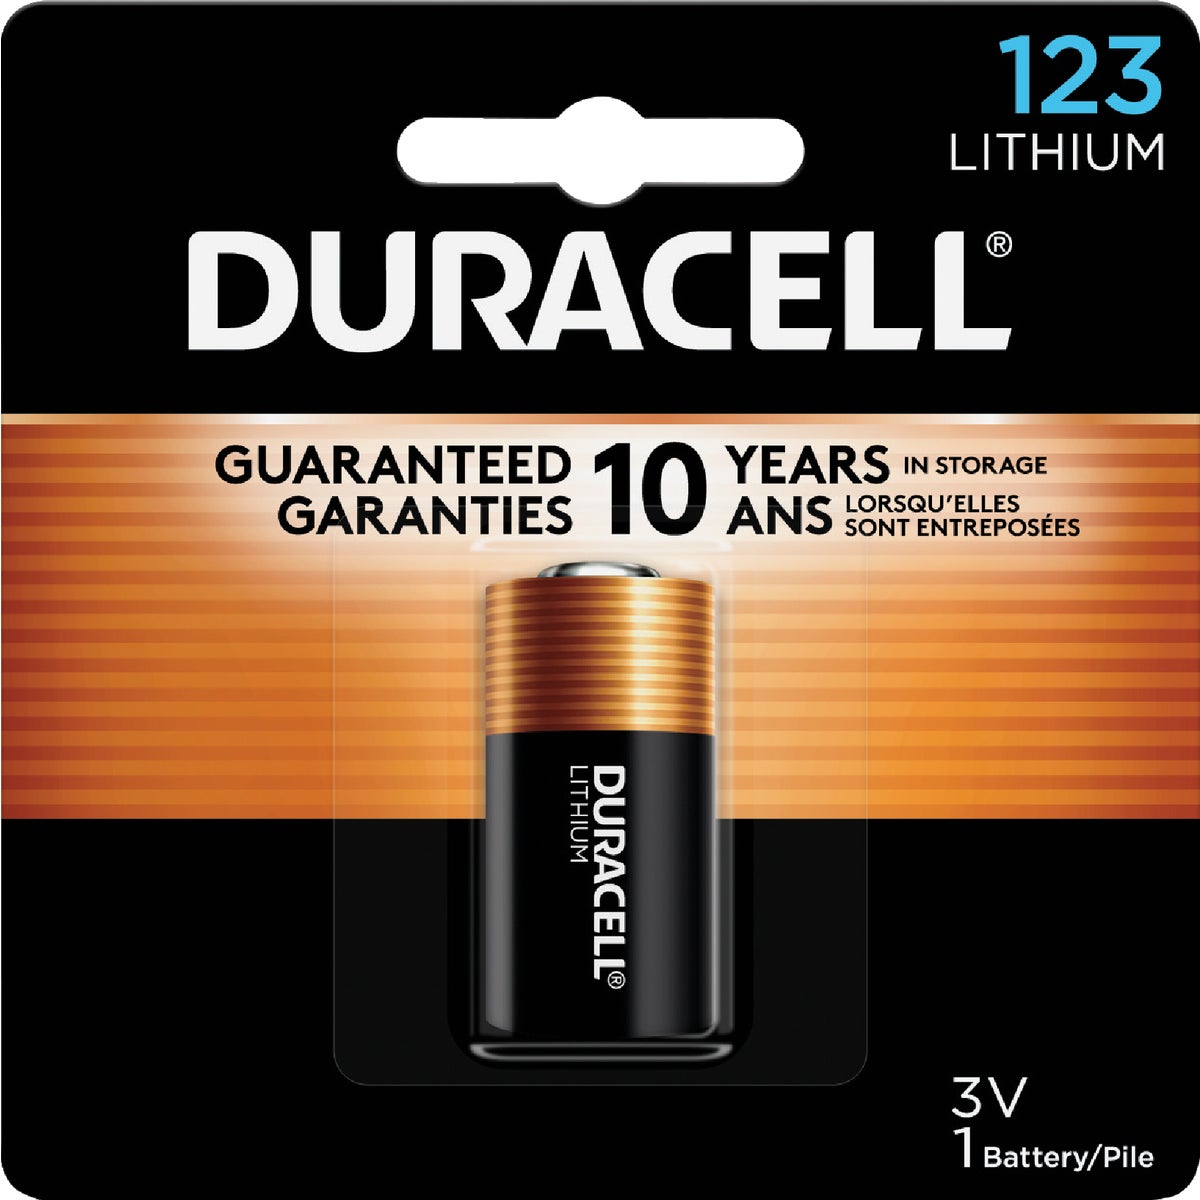 Duracell 123 Ultra Lithium Battery